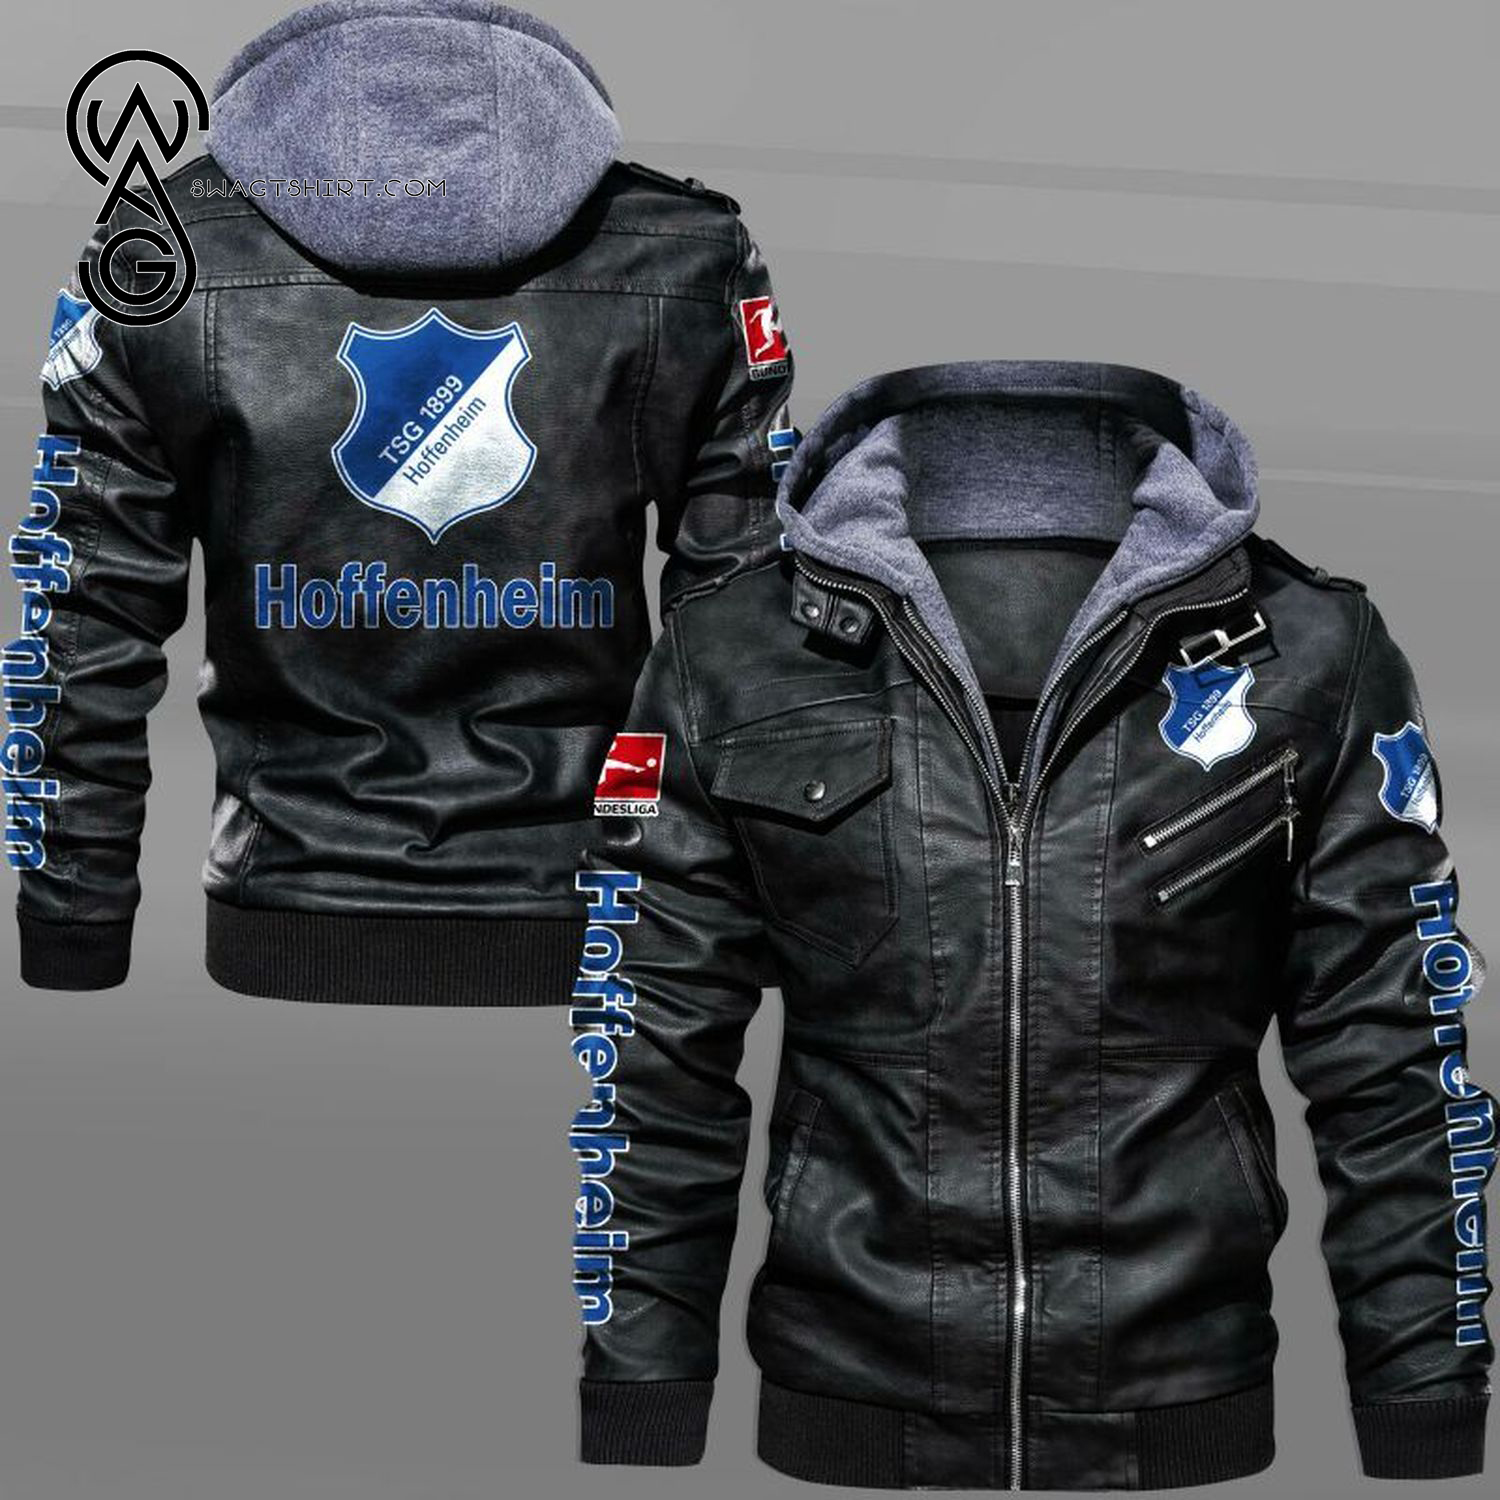 TSG Hoffenheim Football Club Leather Jacket